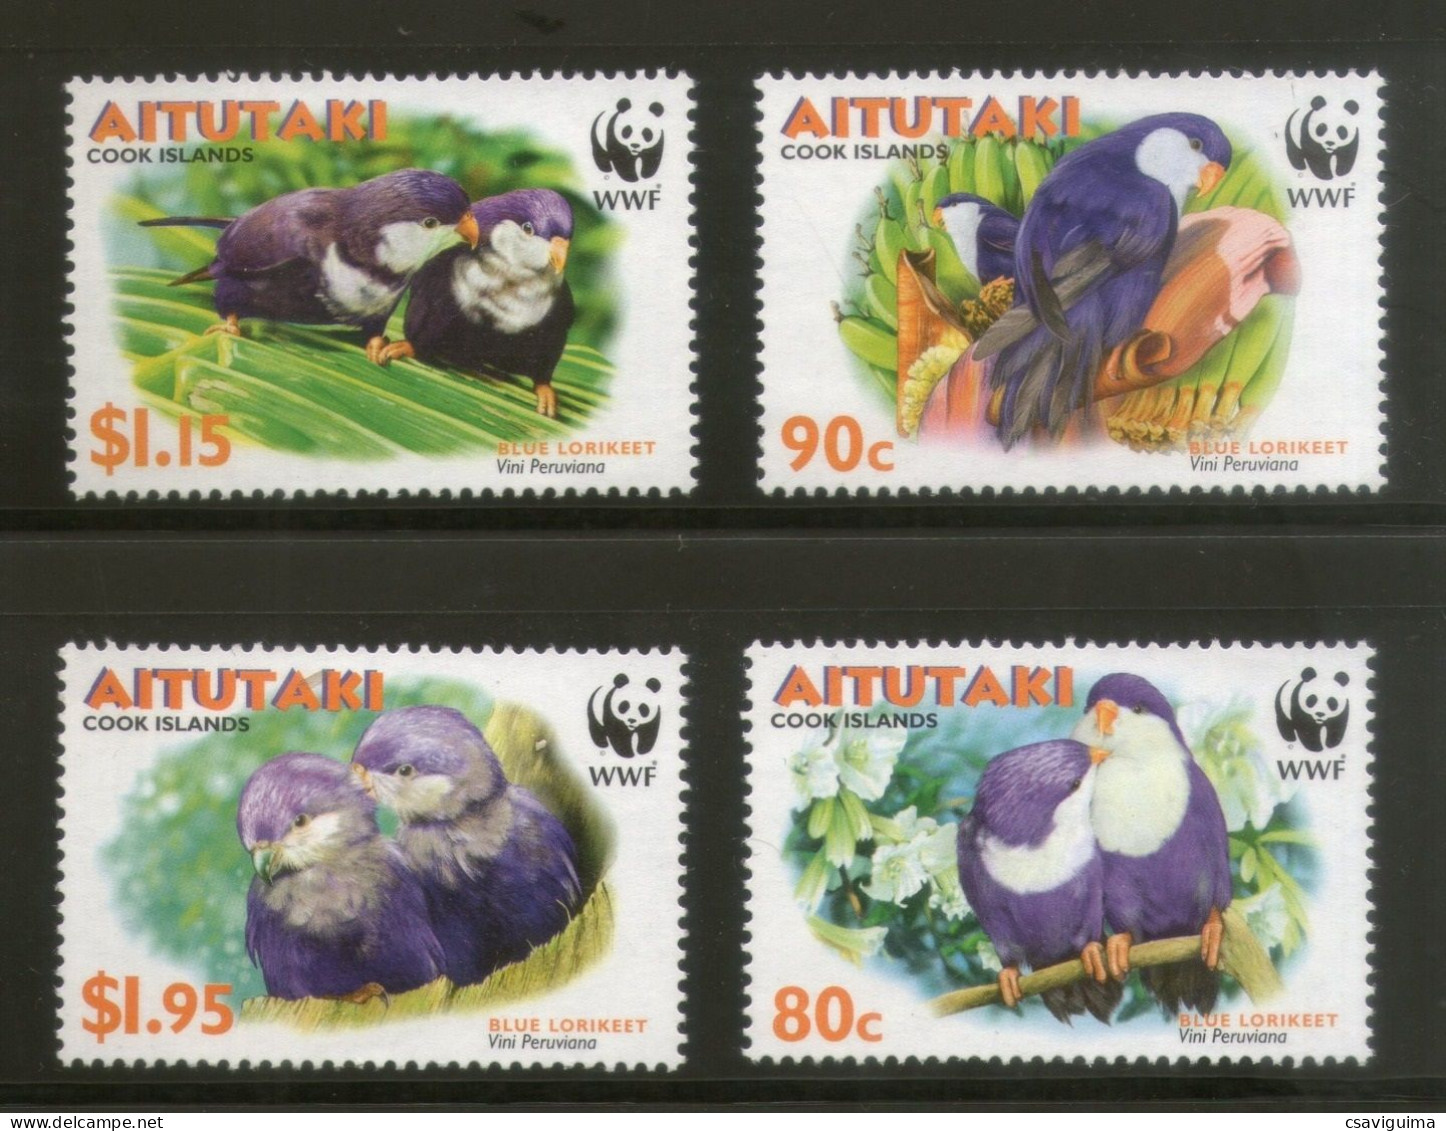 Aitutaki - 2002 - Birds: Parrot, WWF - Yv 589/92 - Parrots